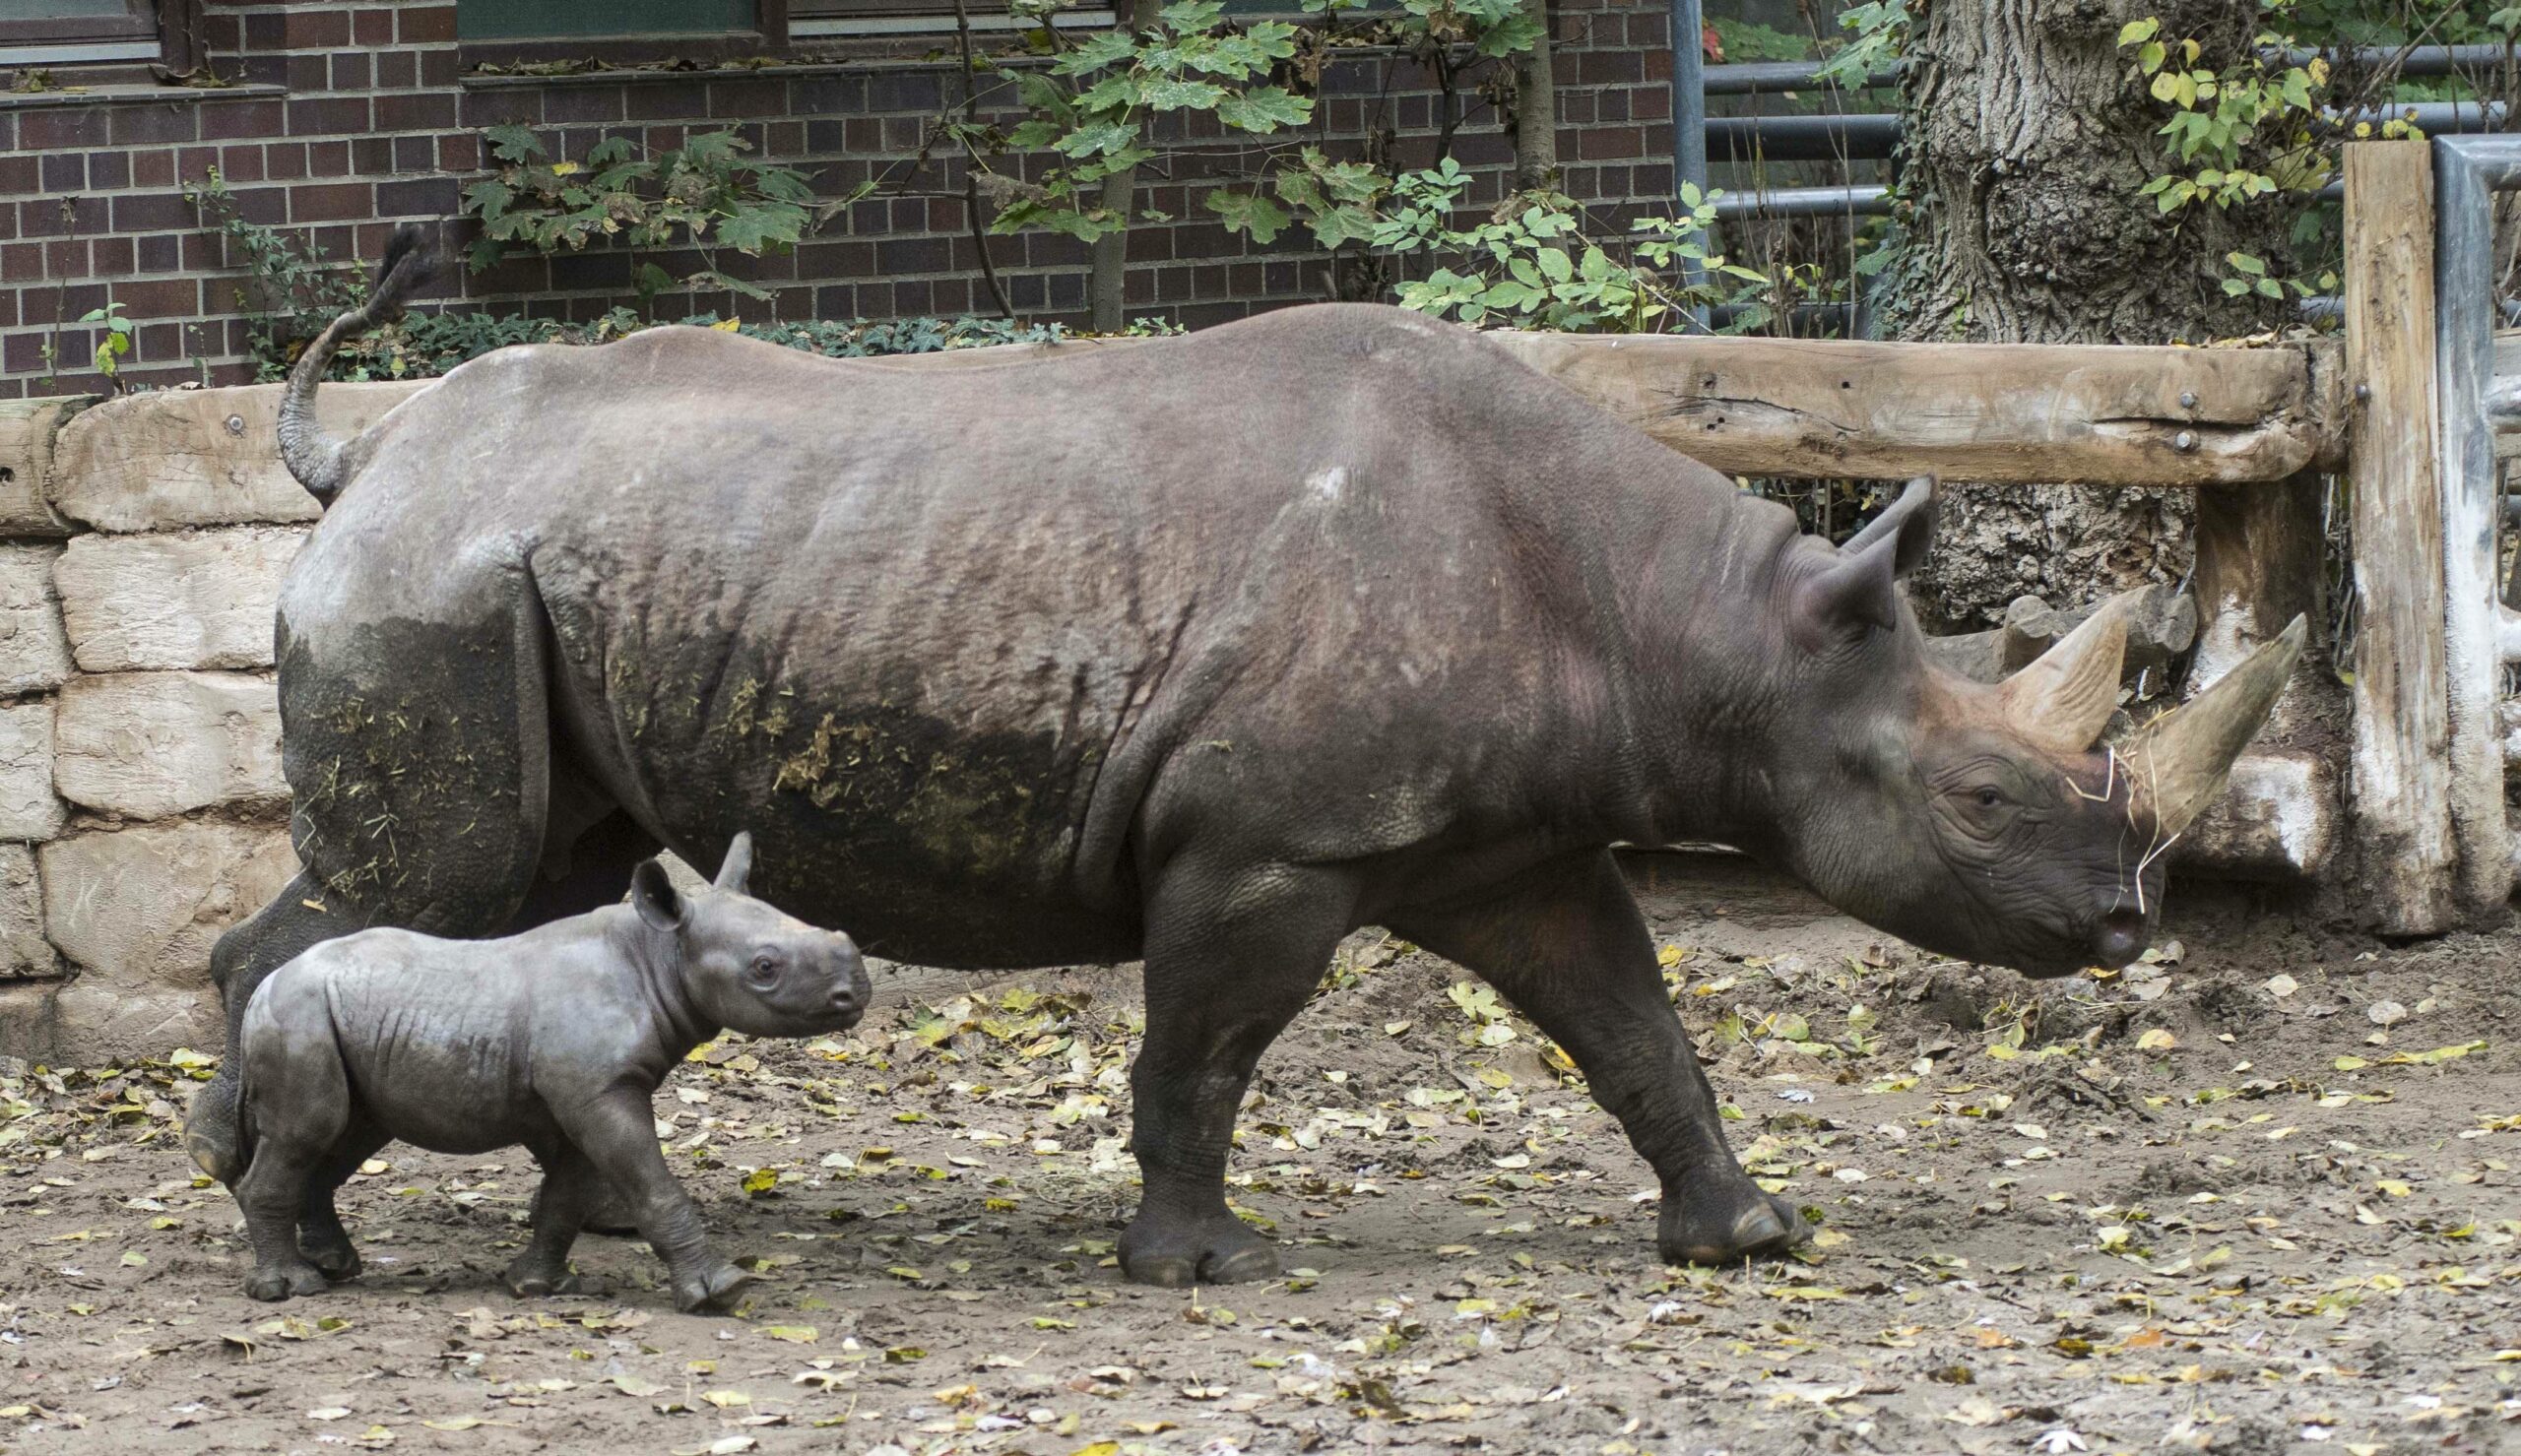 Mama-Spitzmaulnashorn und Baby-Spitzmaulnashorn im Zoo Berlin. Foto: Imago/Olaf Wagner